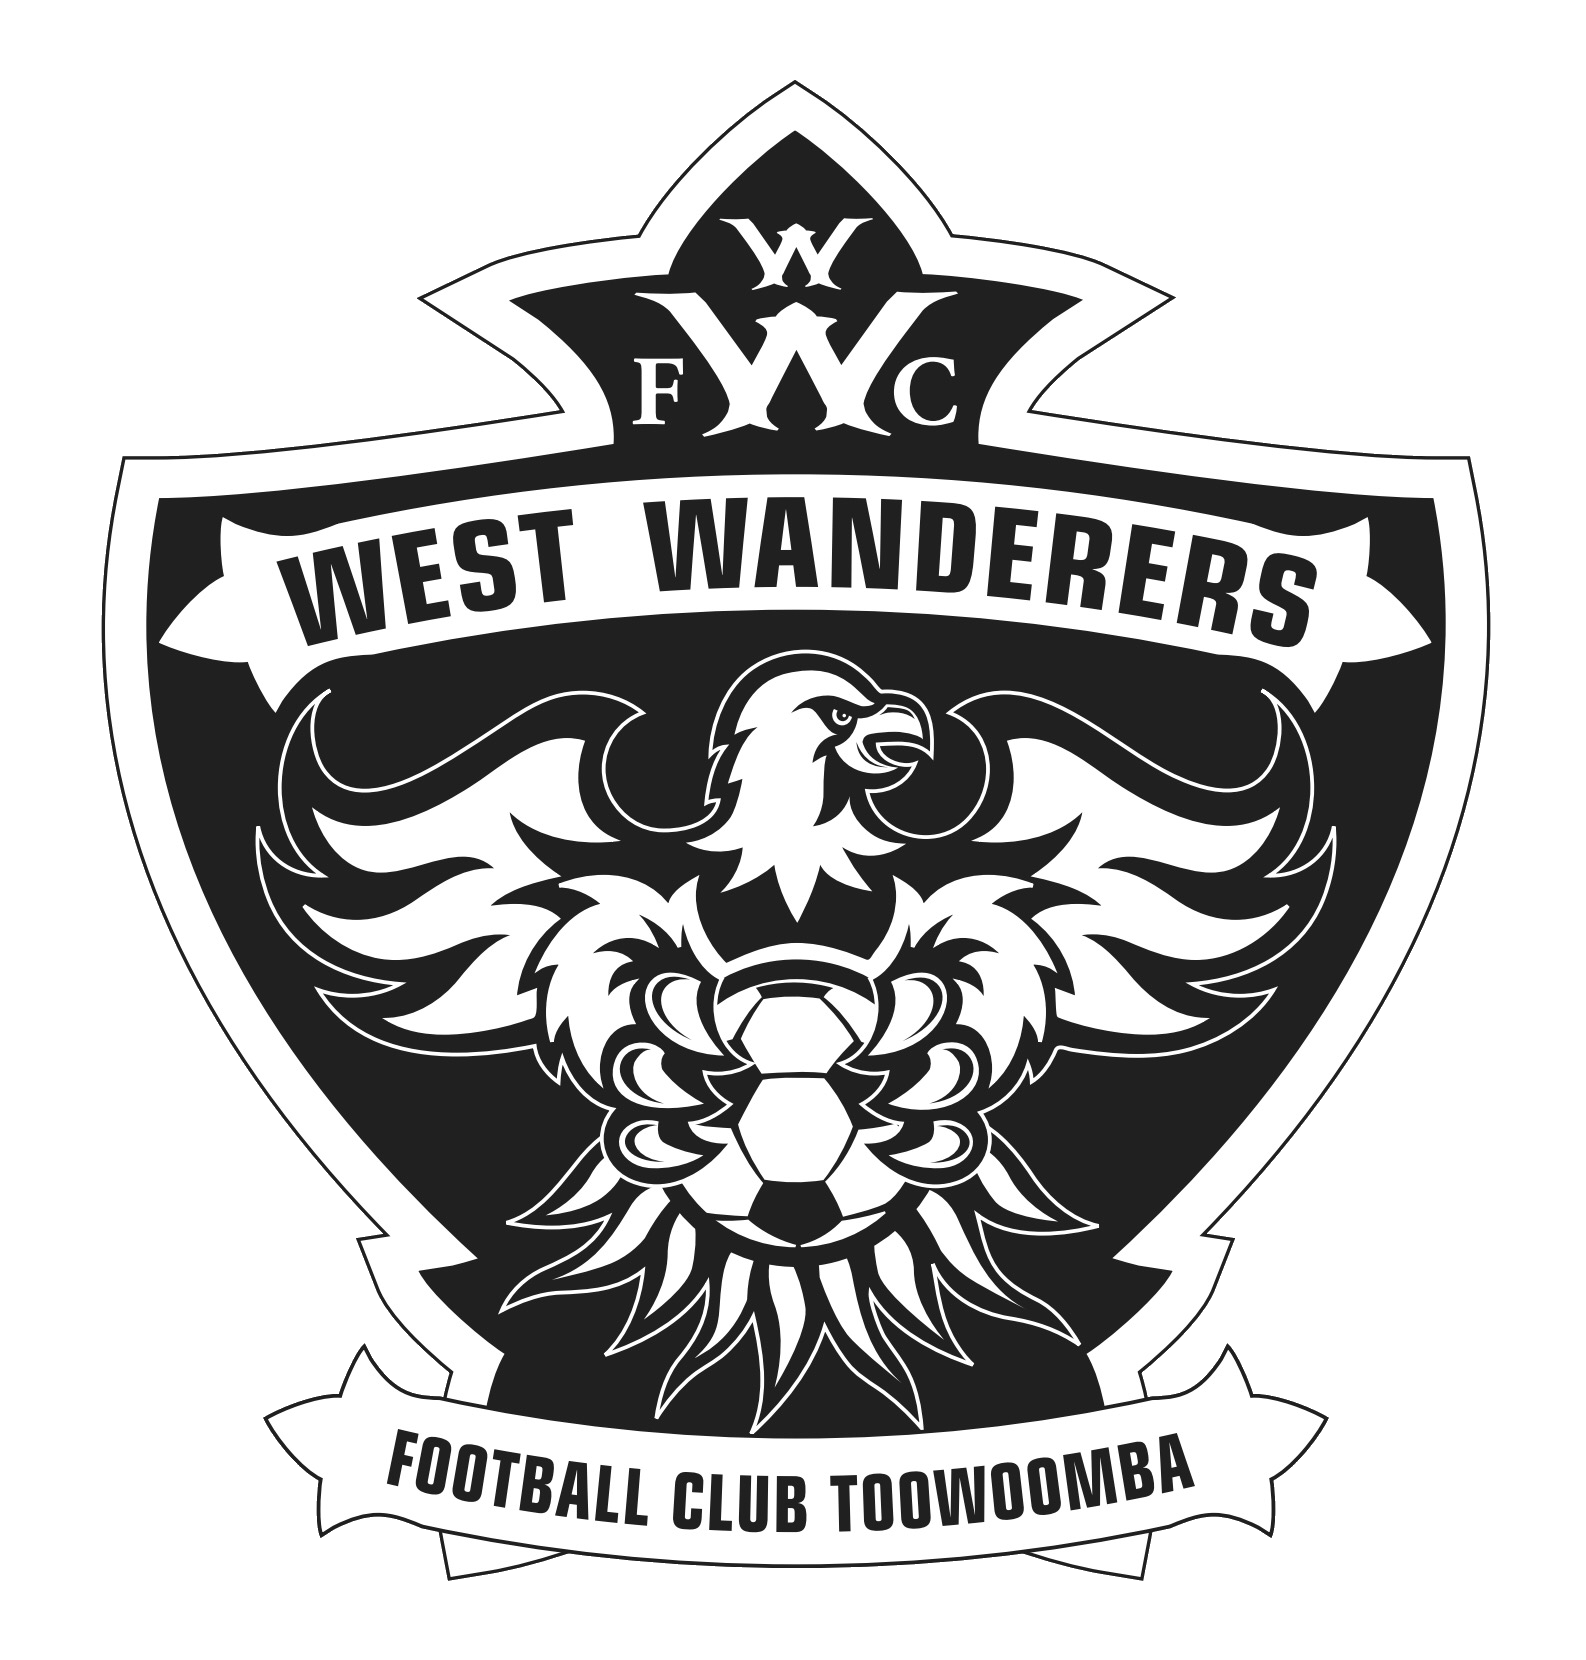 west wanderers football club toowoomba soccer logo